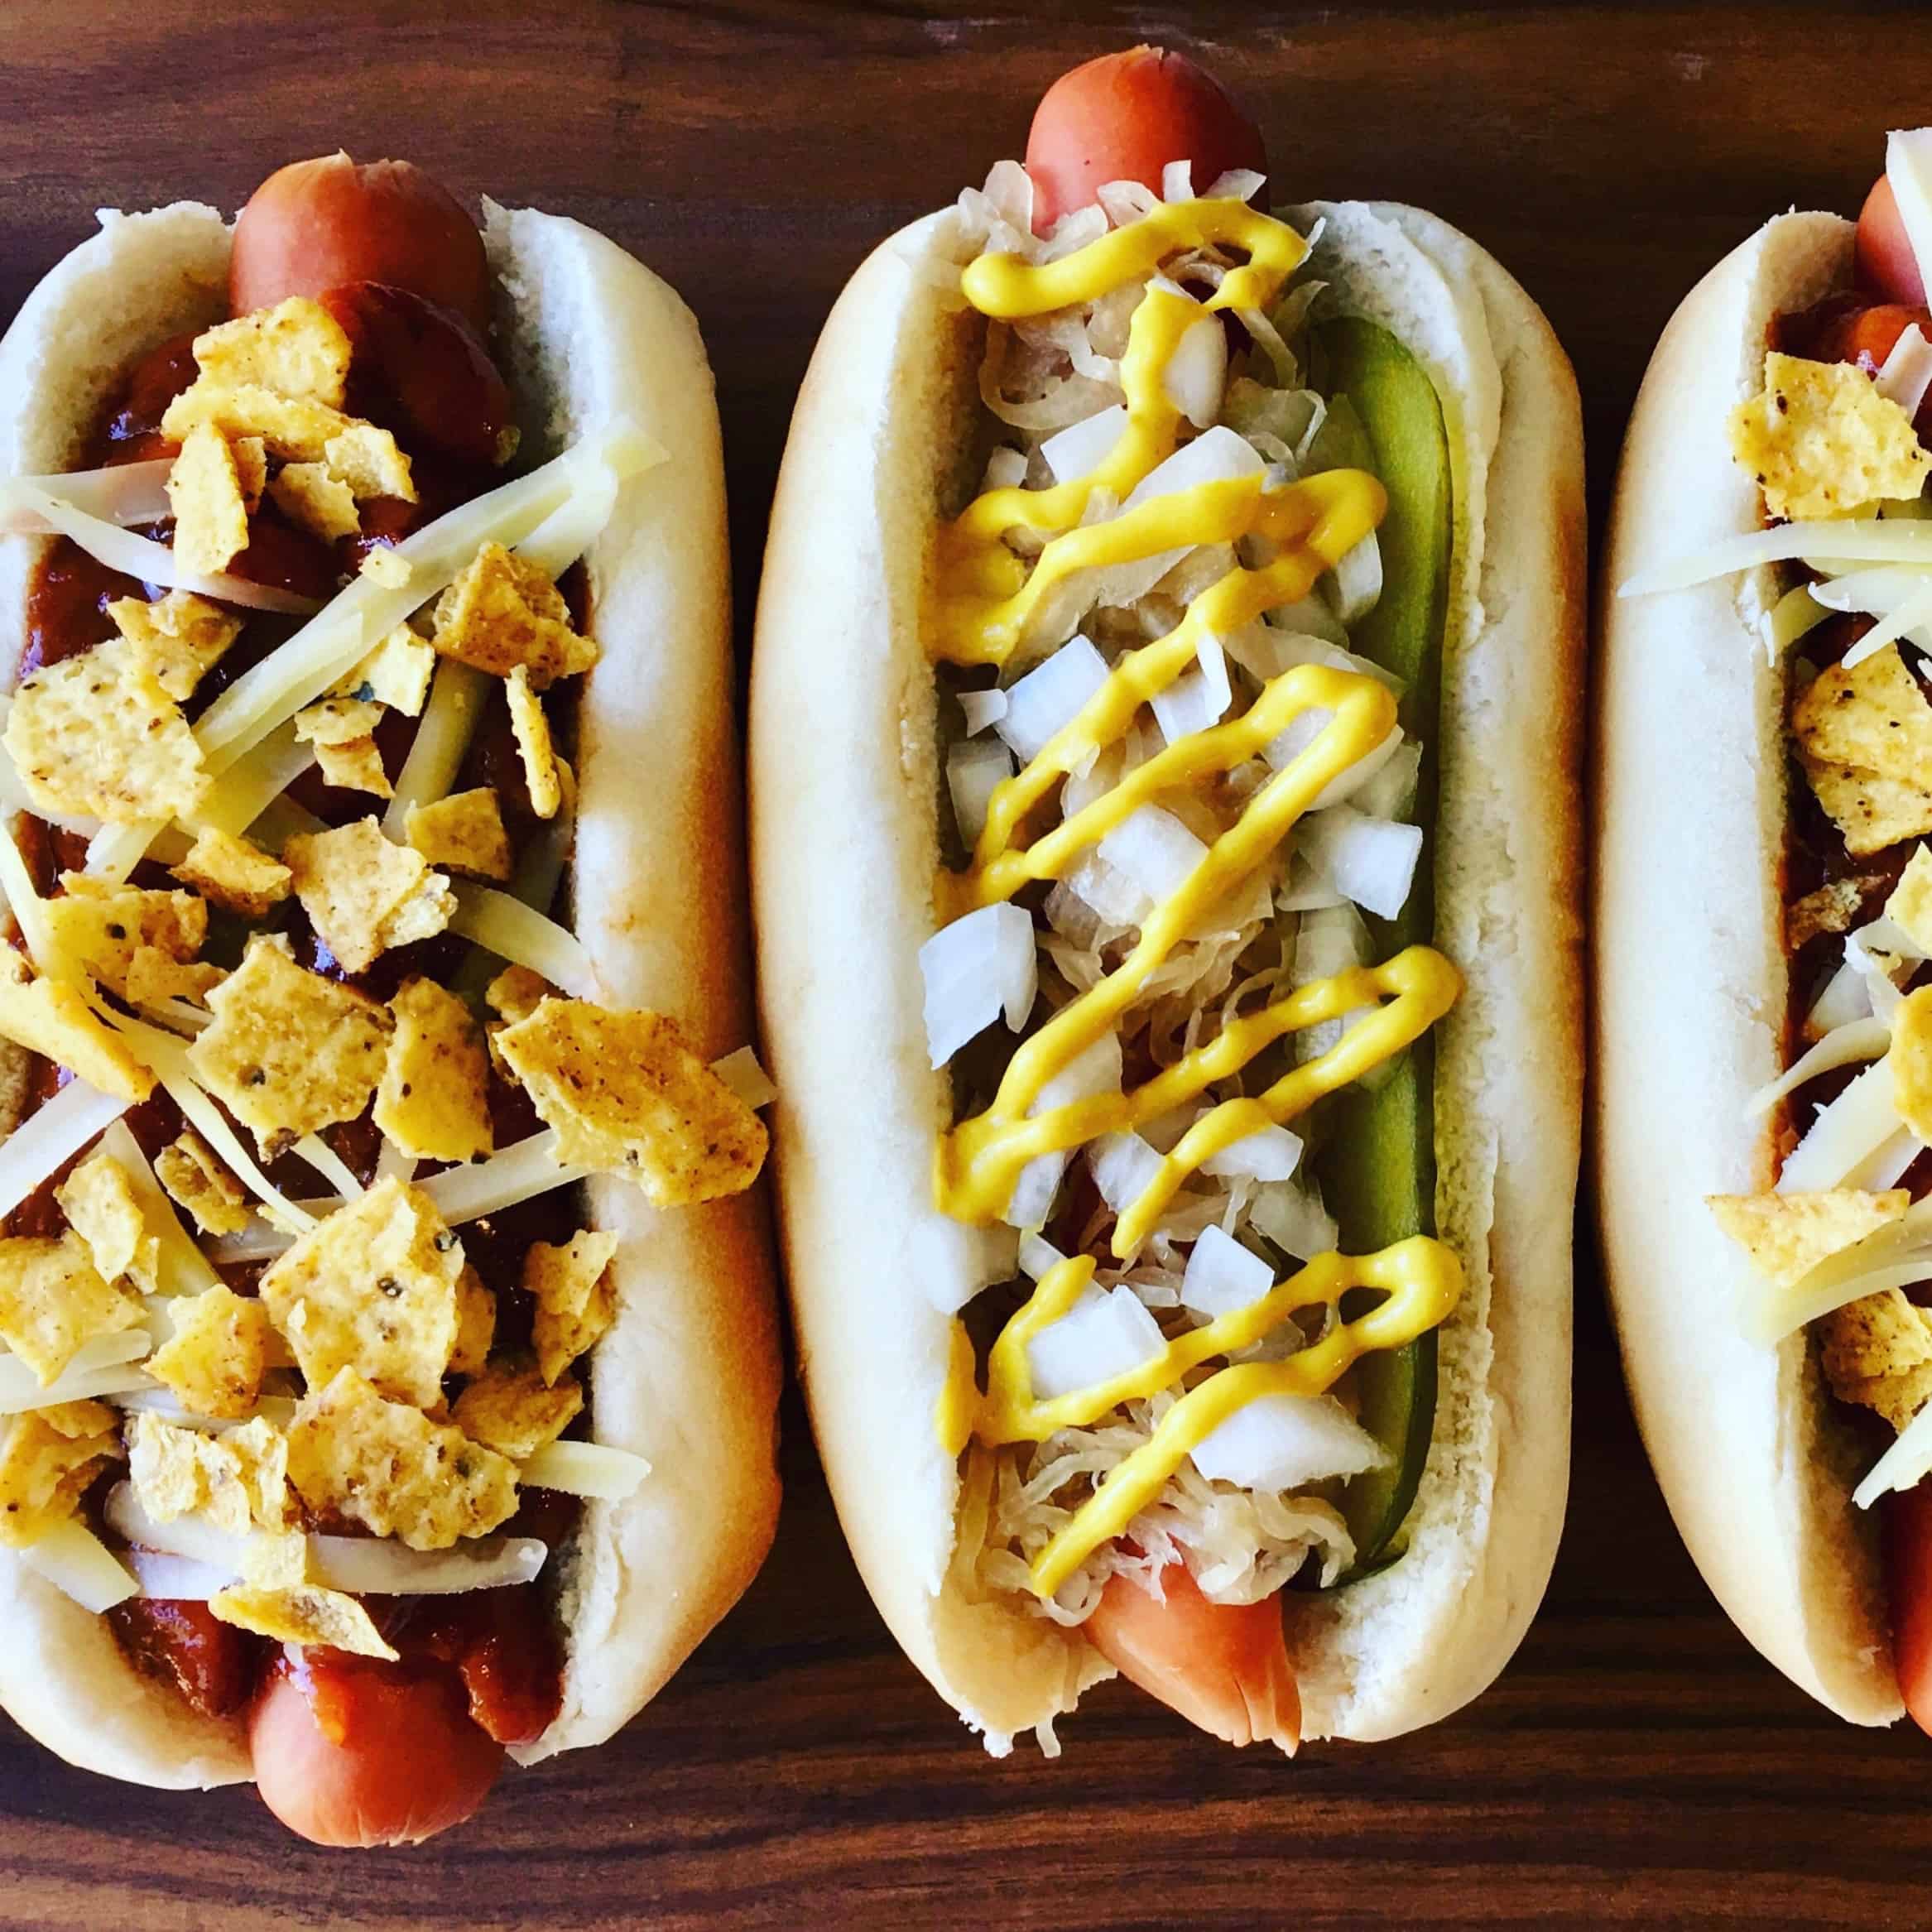 absurd skrive et brev moronic Hot Dog Toppings Ideas - Peter's Food Adventures